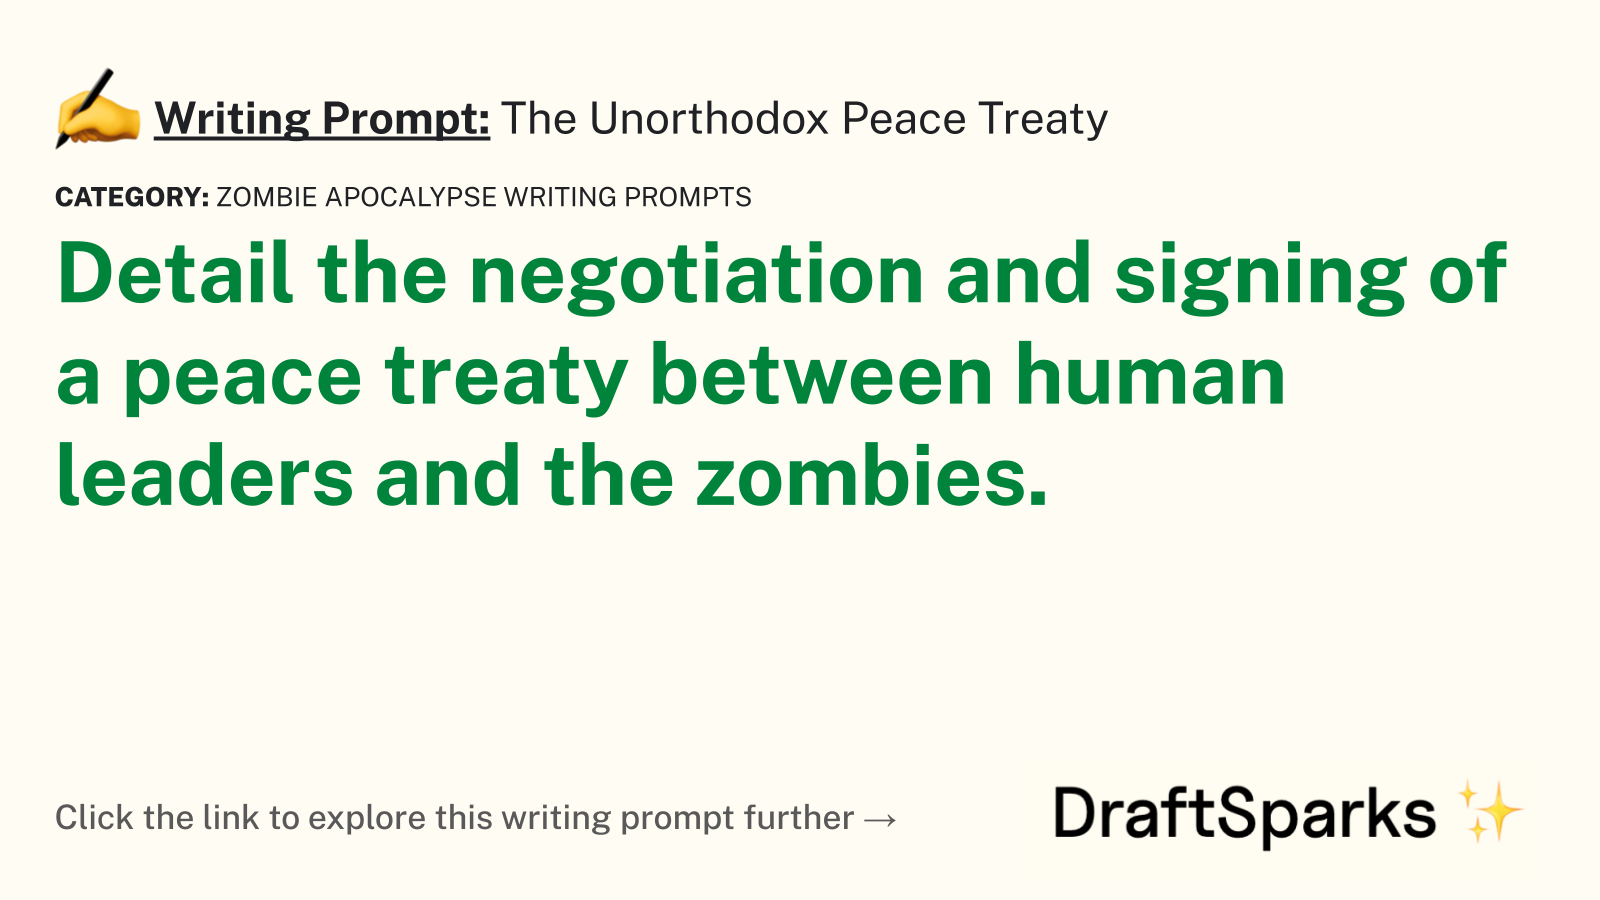 The Unorthodox Peace Treaty